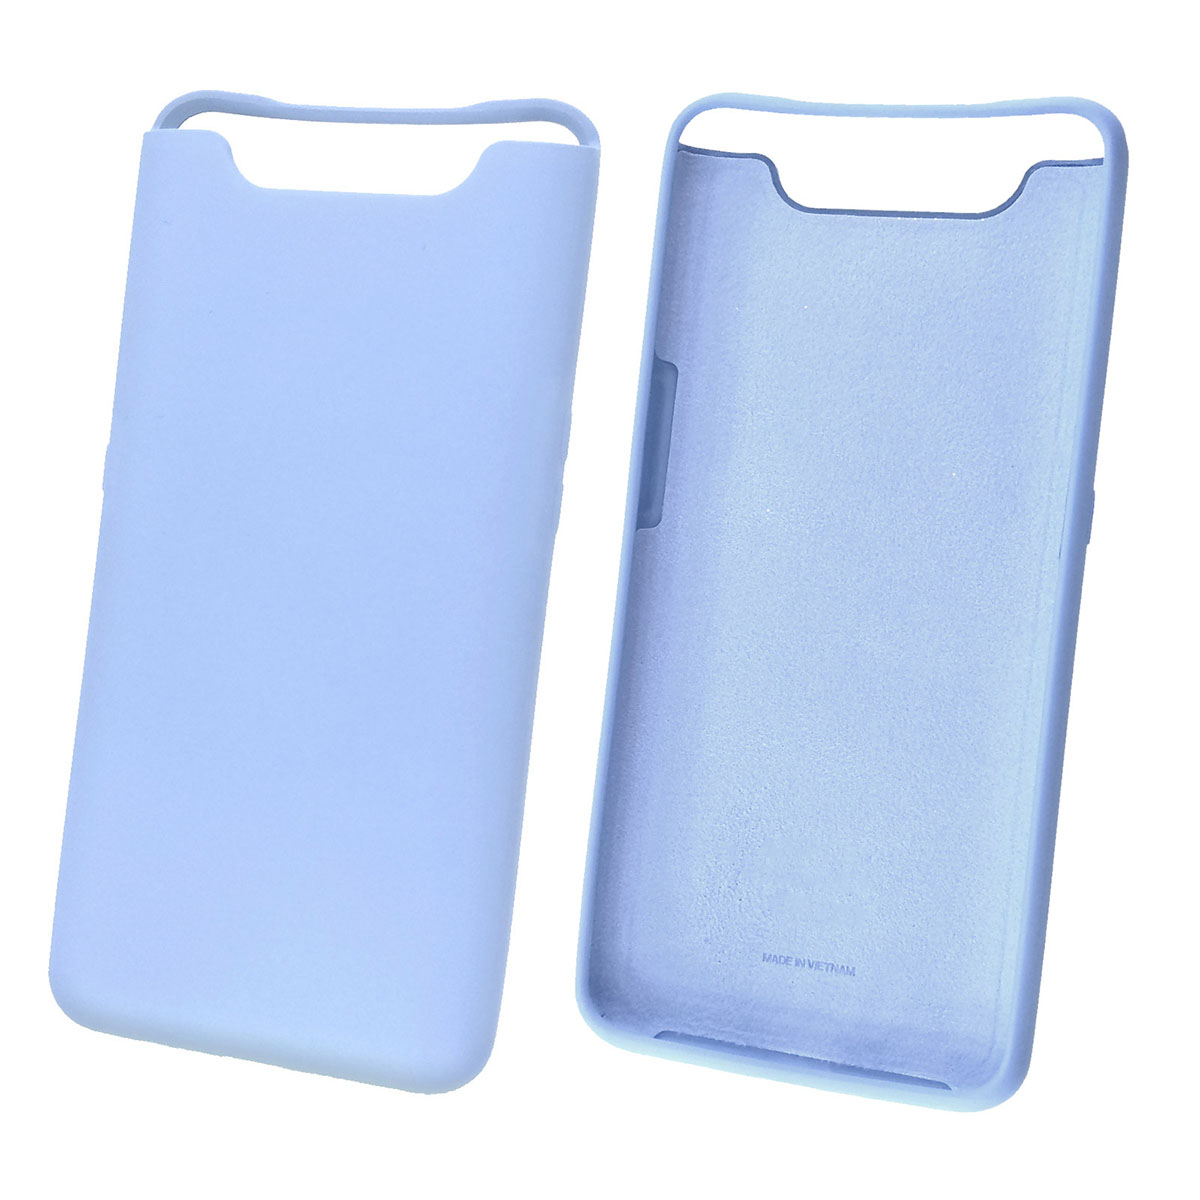 Чехол накладка Silicon Cover для Samsung A80 2019 (SM-A805), силикон, бархат, цвет голубой.